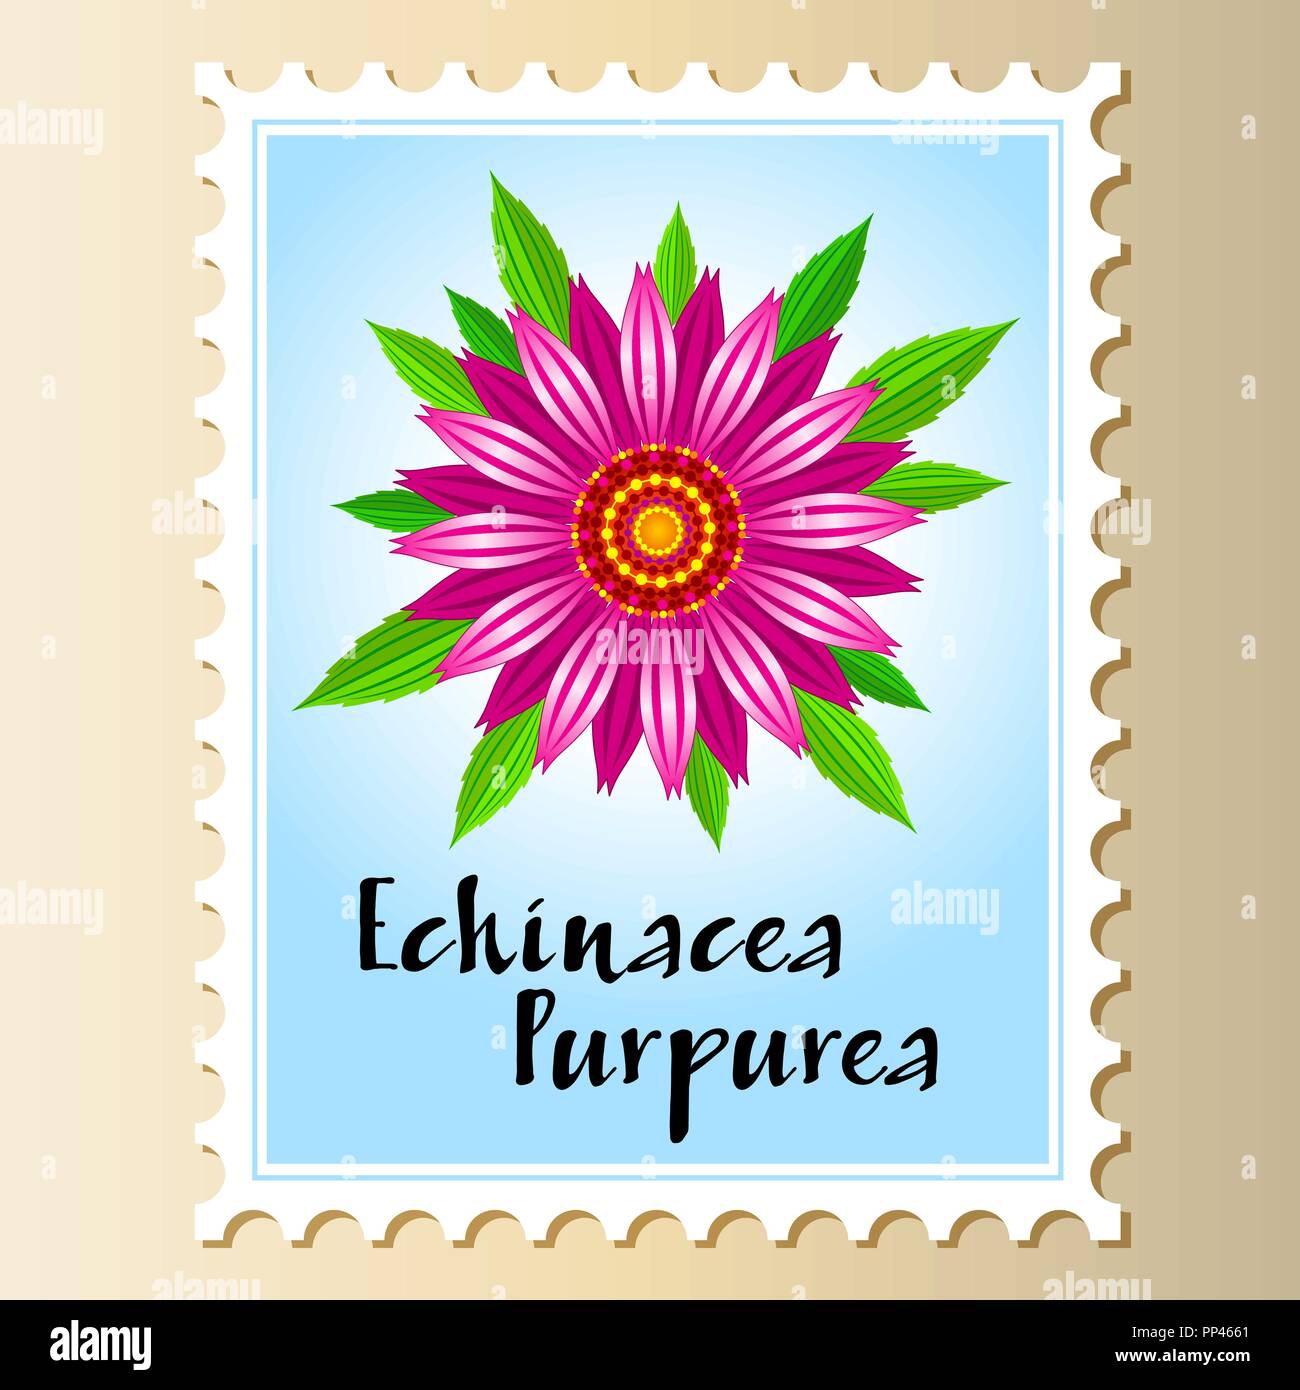 Echinacea purpurea Vektor Blume auf einer Briefmarke. Stock Vektor